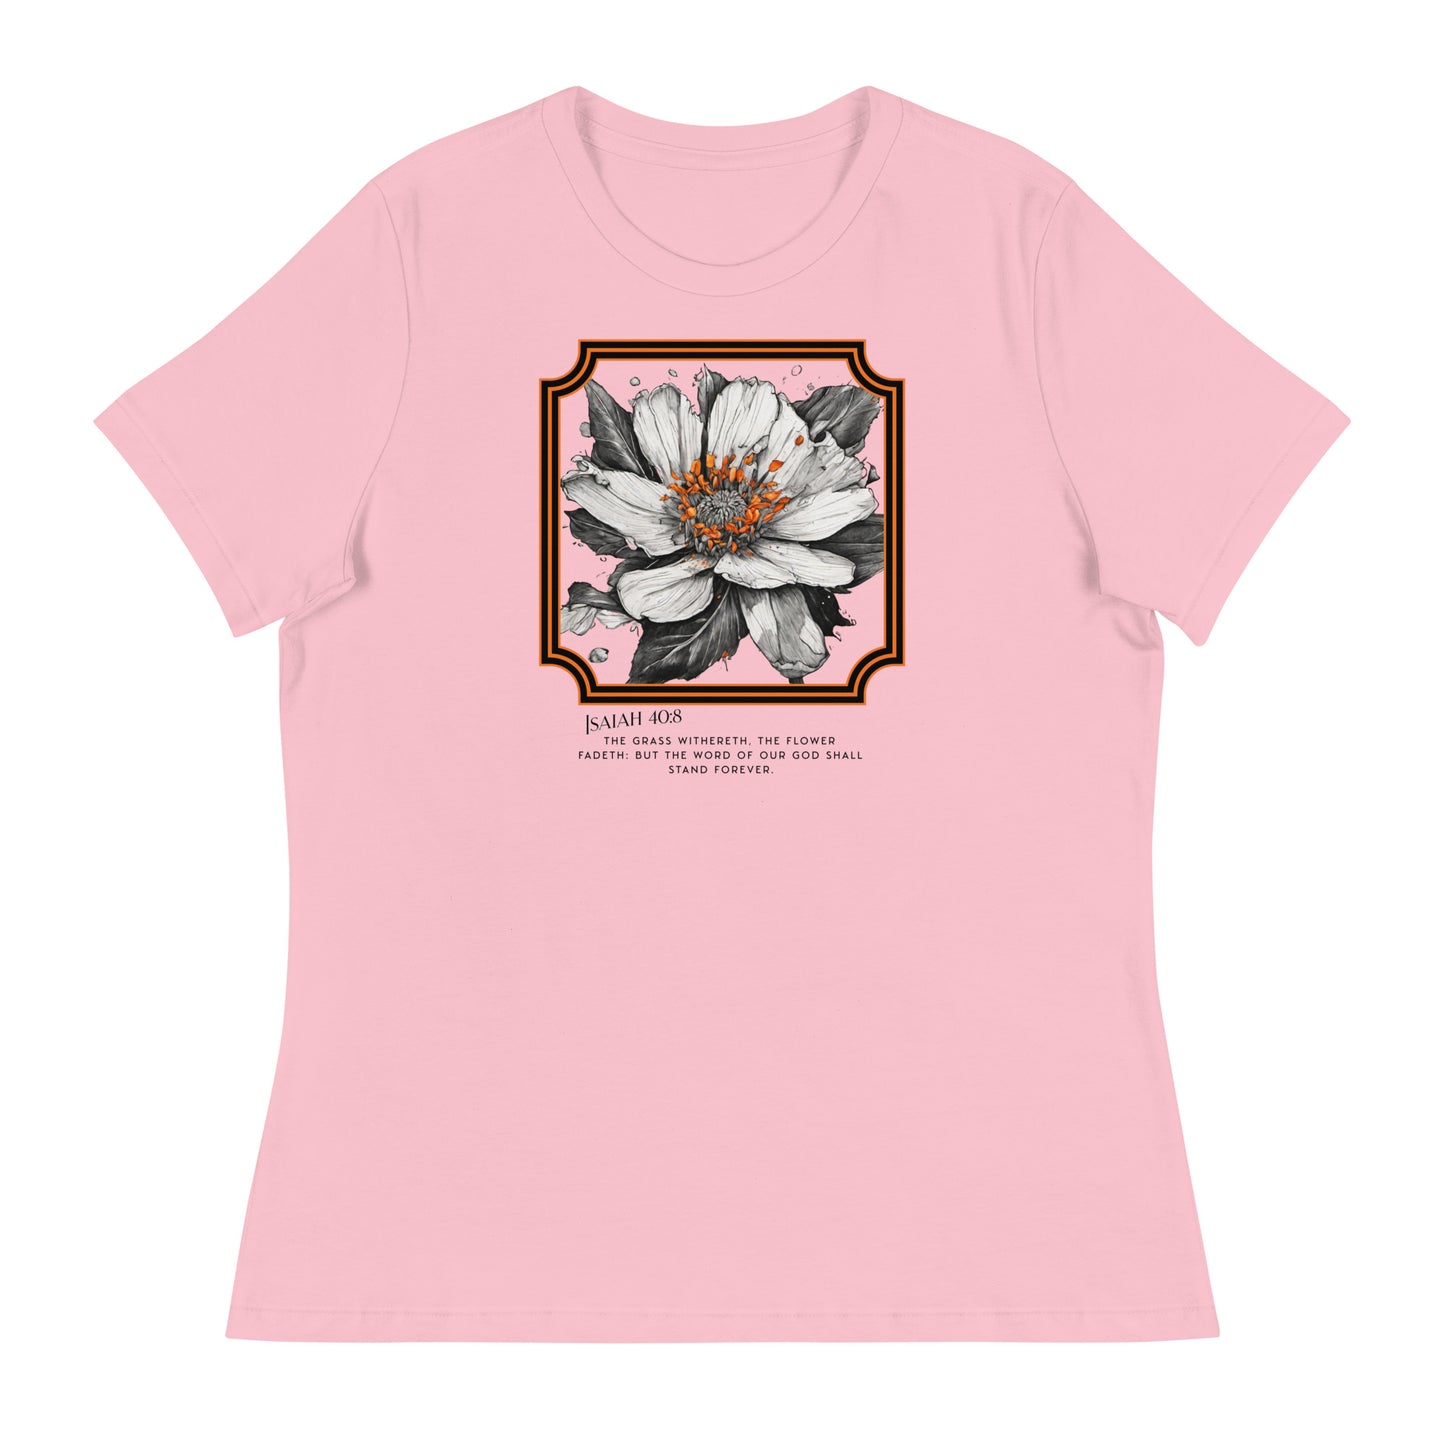 Isaiah 40:8 Flower Fadeth Women's Christian Graphic T-Shirt Pink